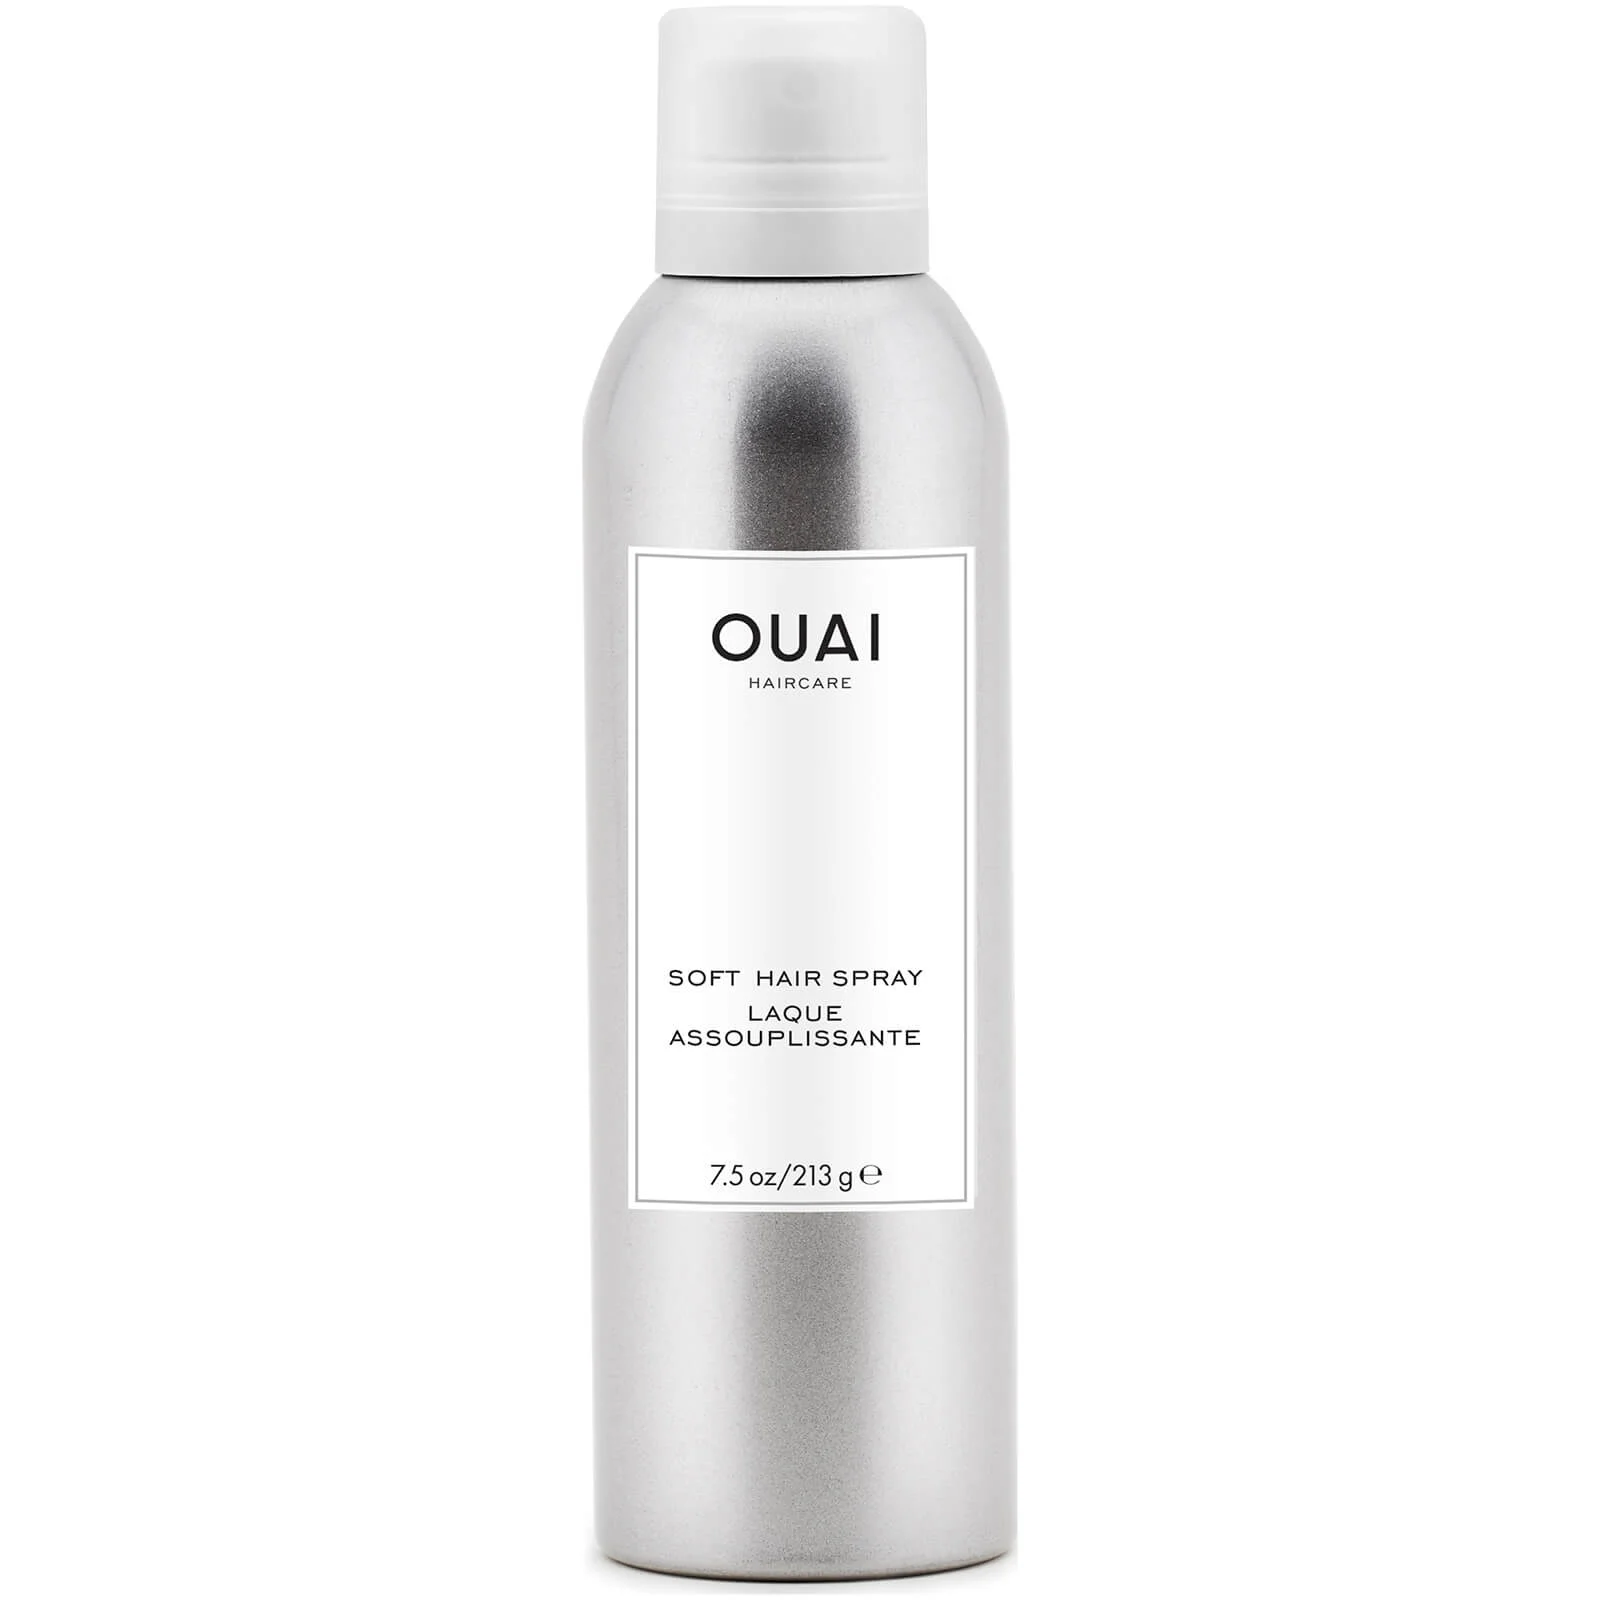 OUAI Soft Hair Spray 213g Image 1